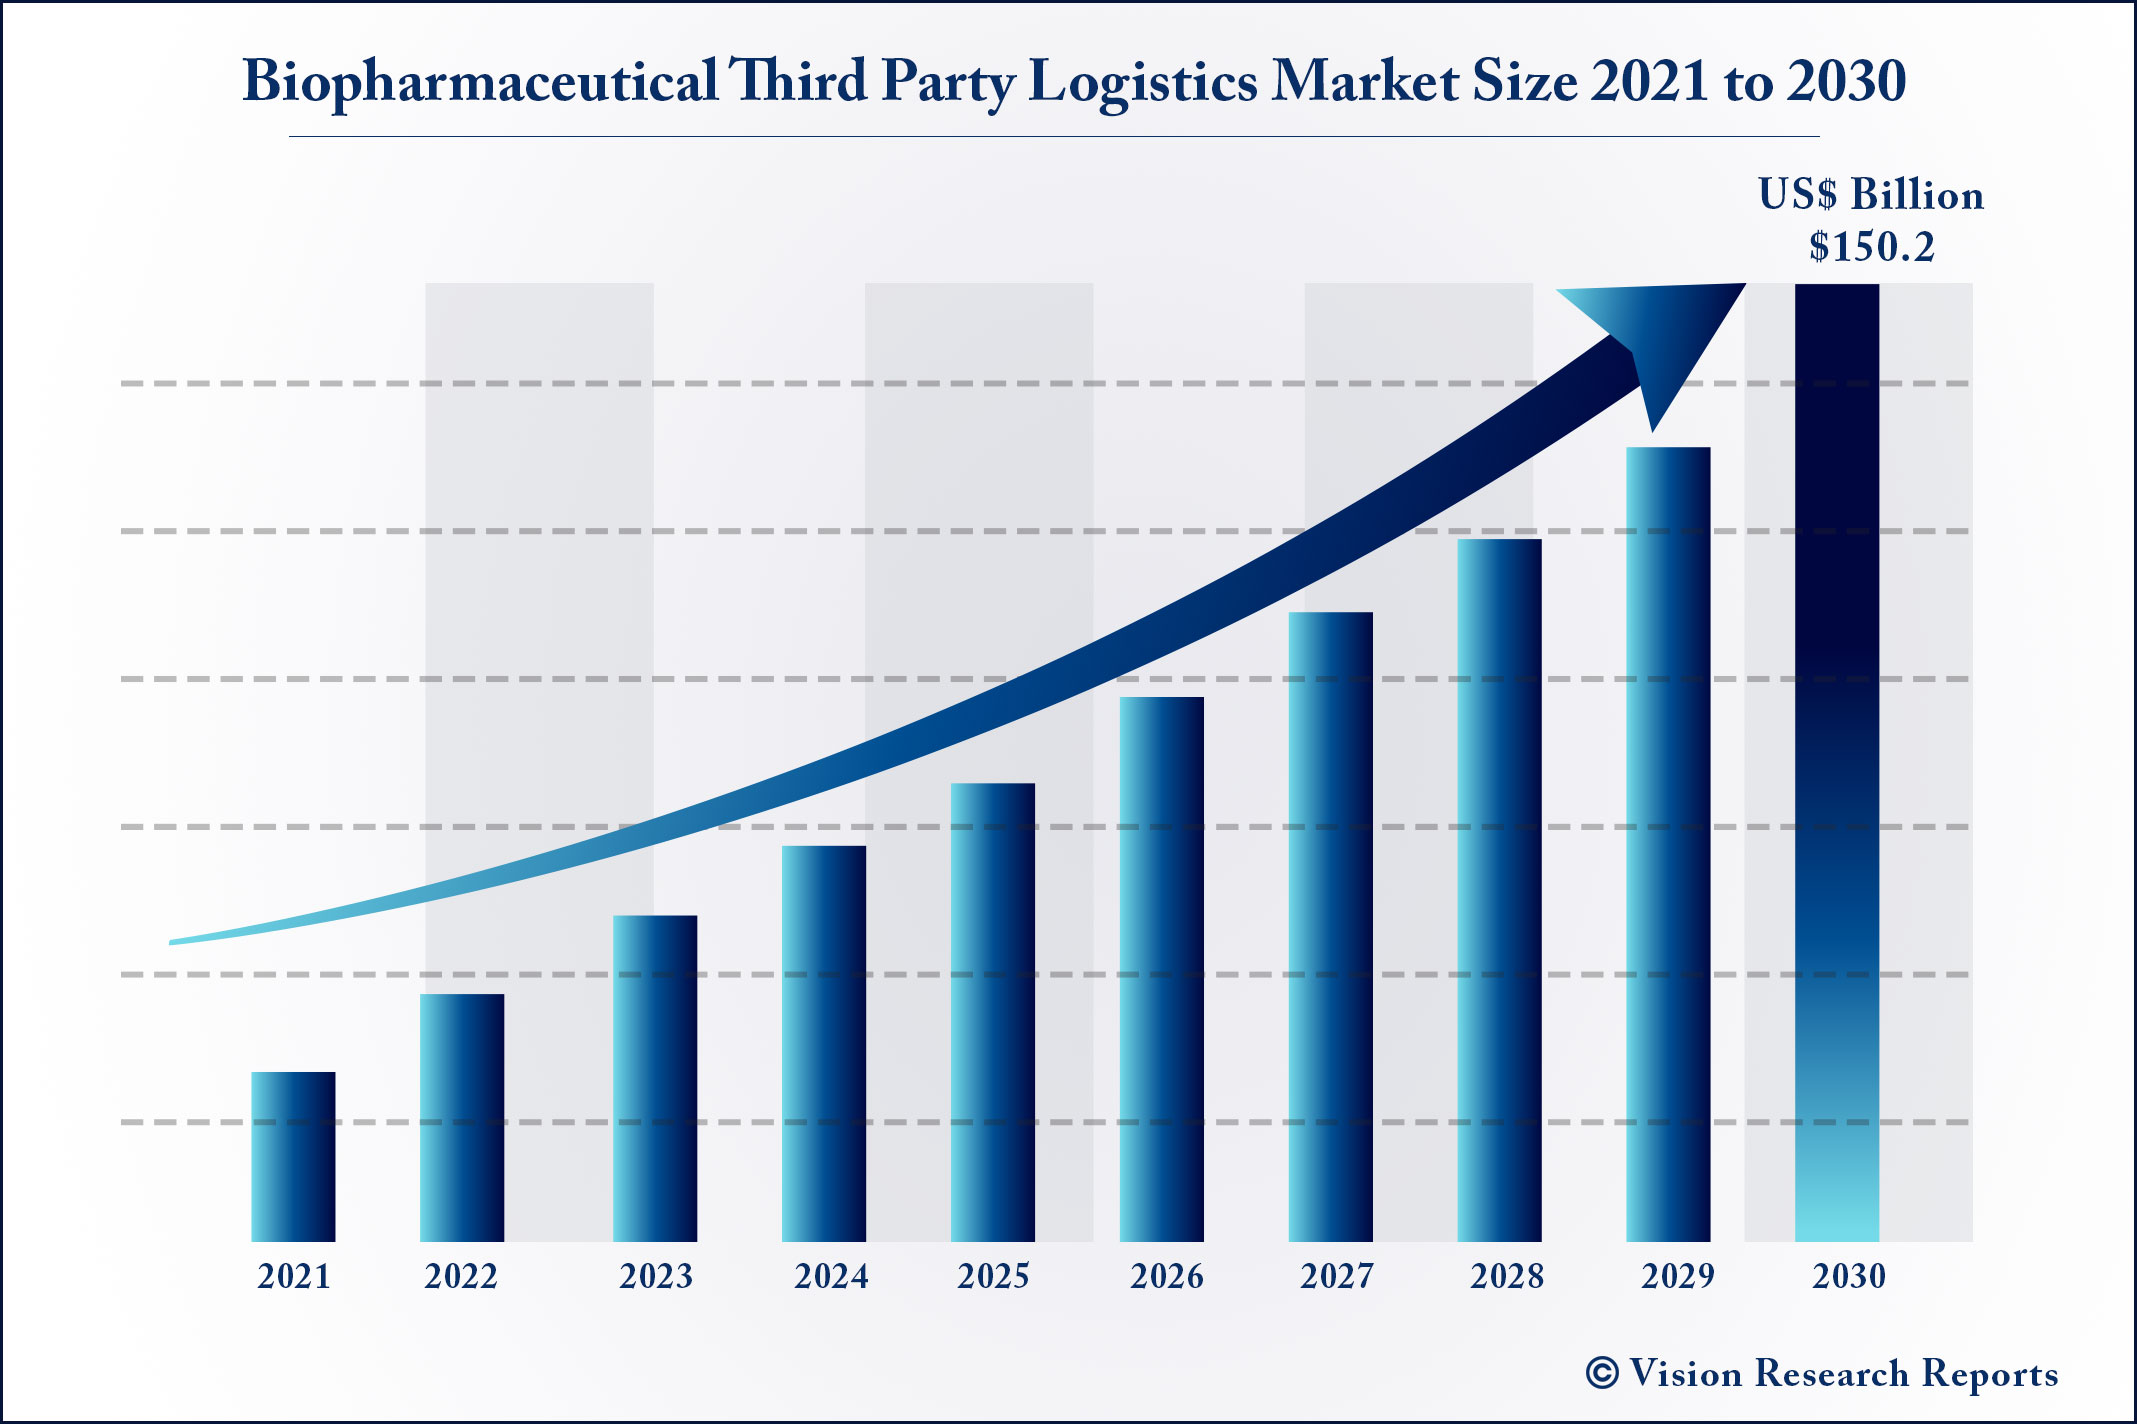 Biopharmaceutical Third Party Logistics Market Size 2021 to 2030